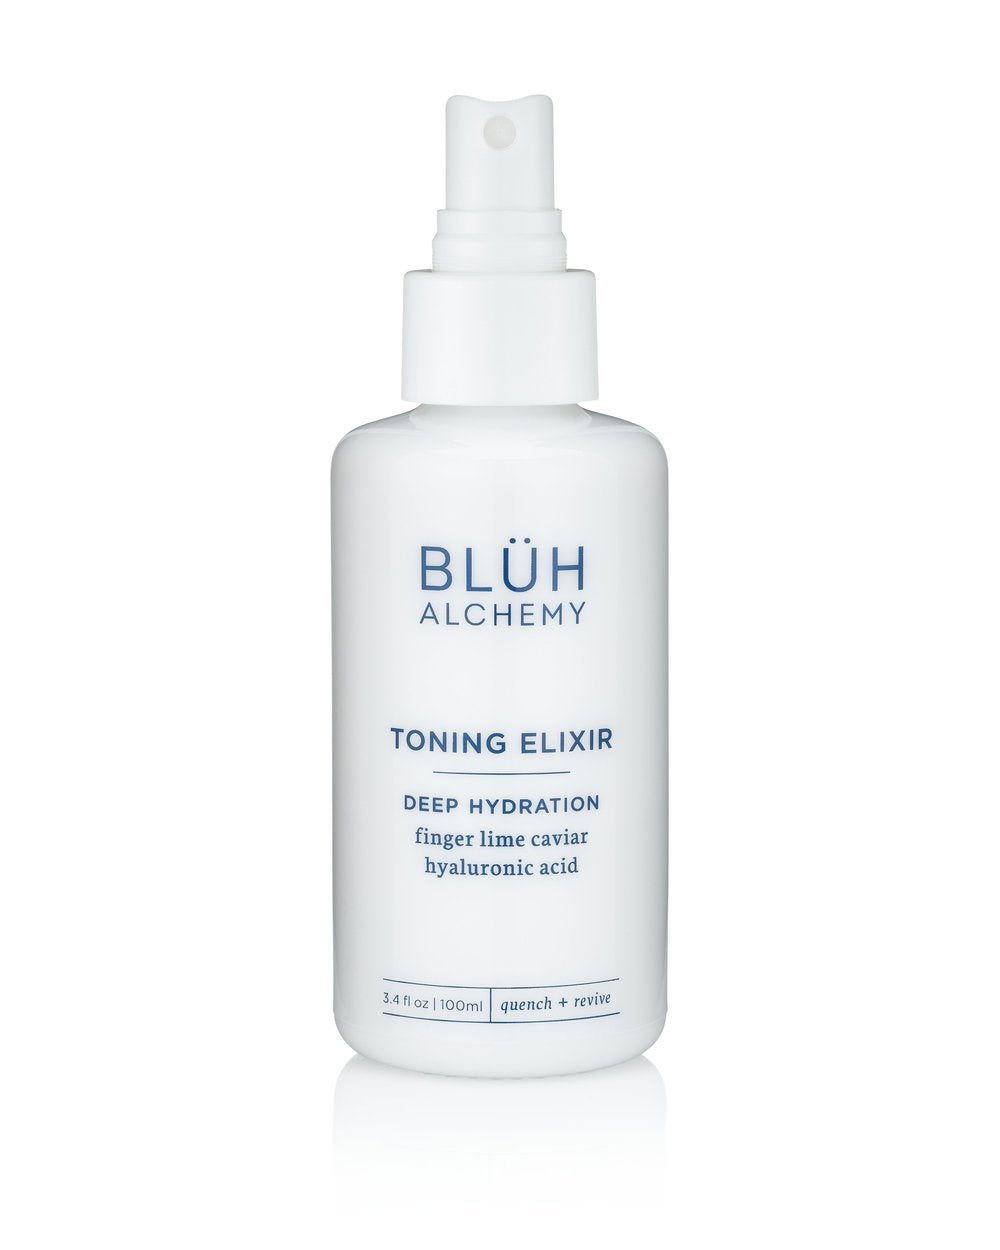 Bluh Alchemy- Toning Elixir